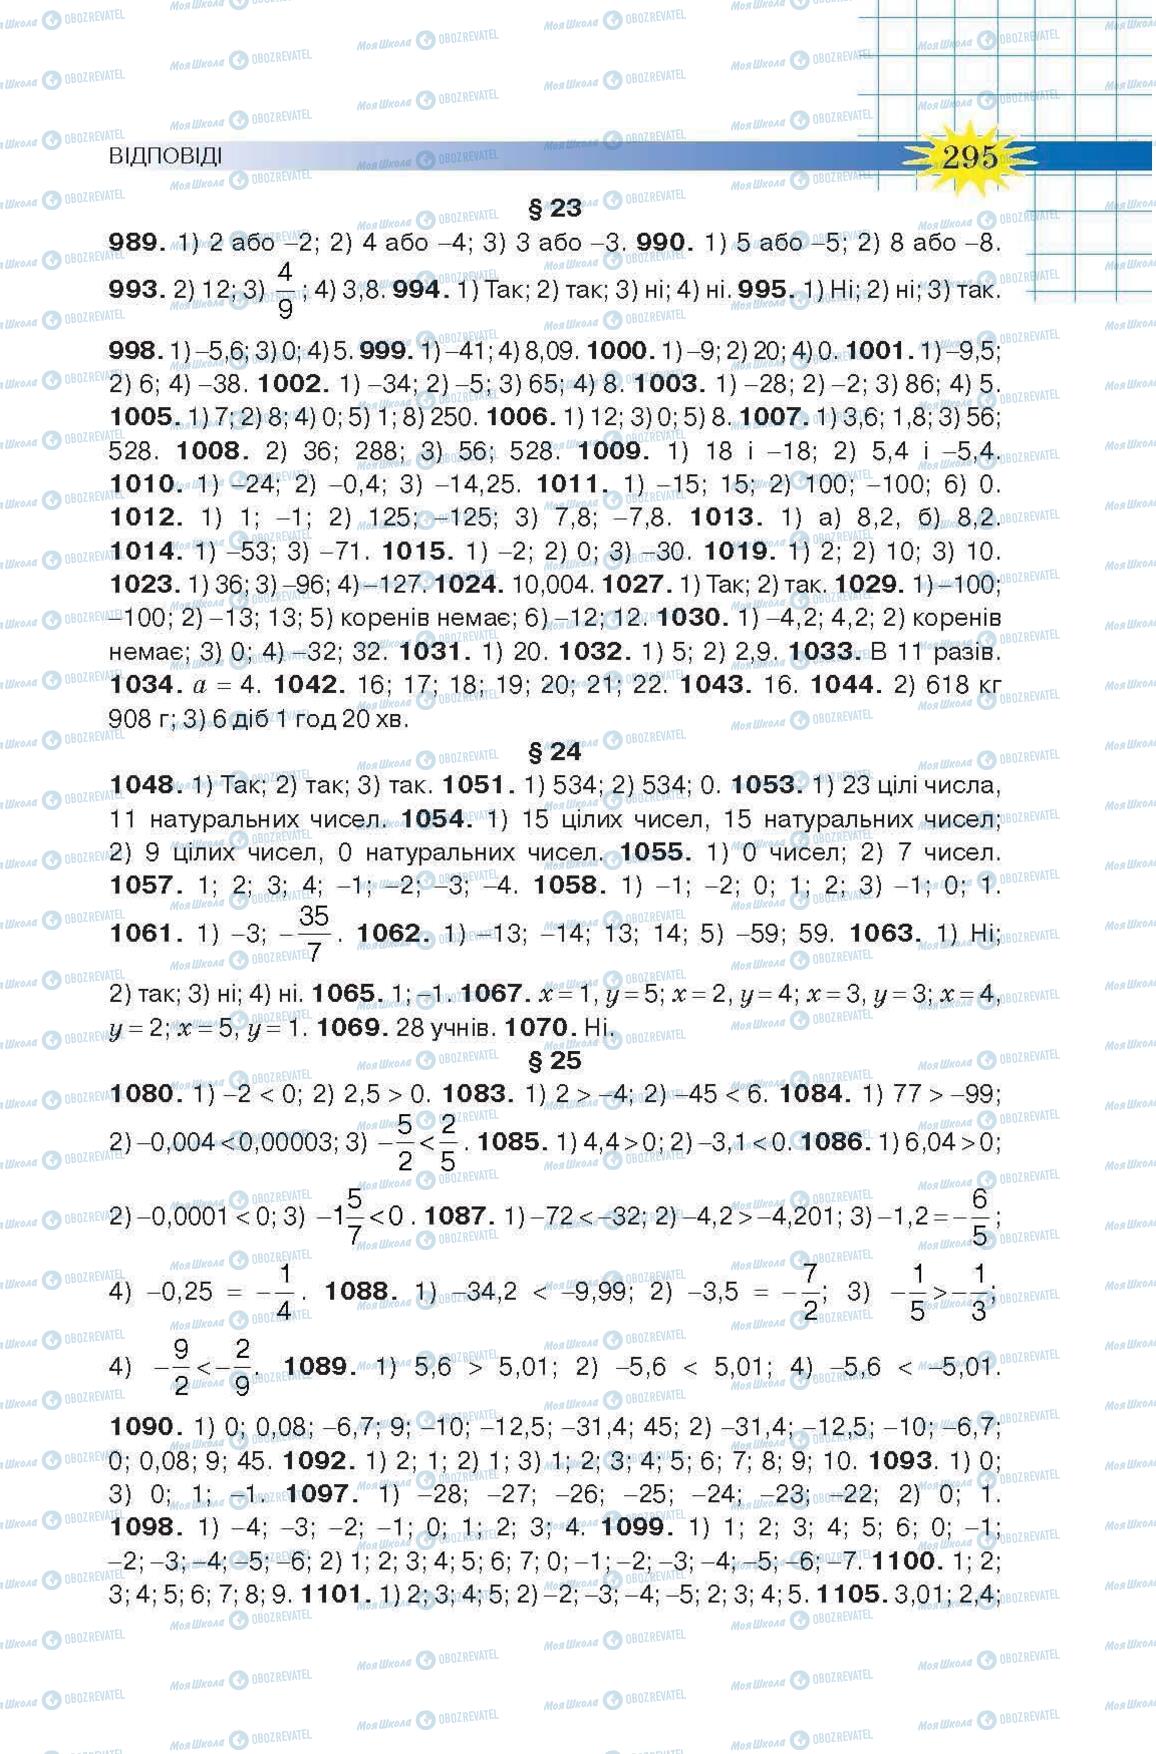 Учебники Математика 6 класс страница 295